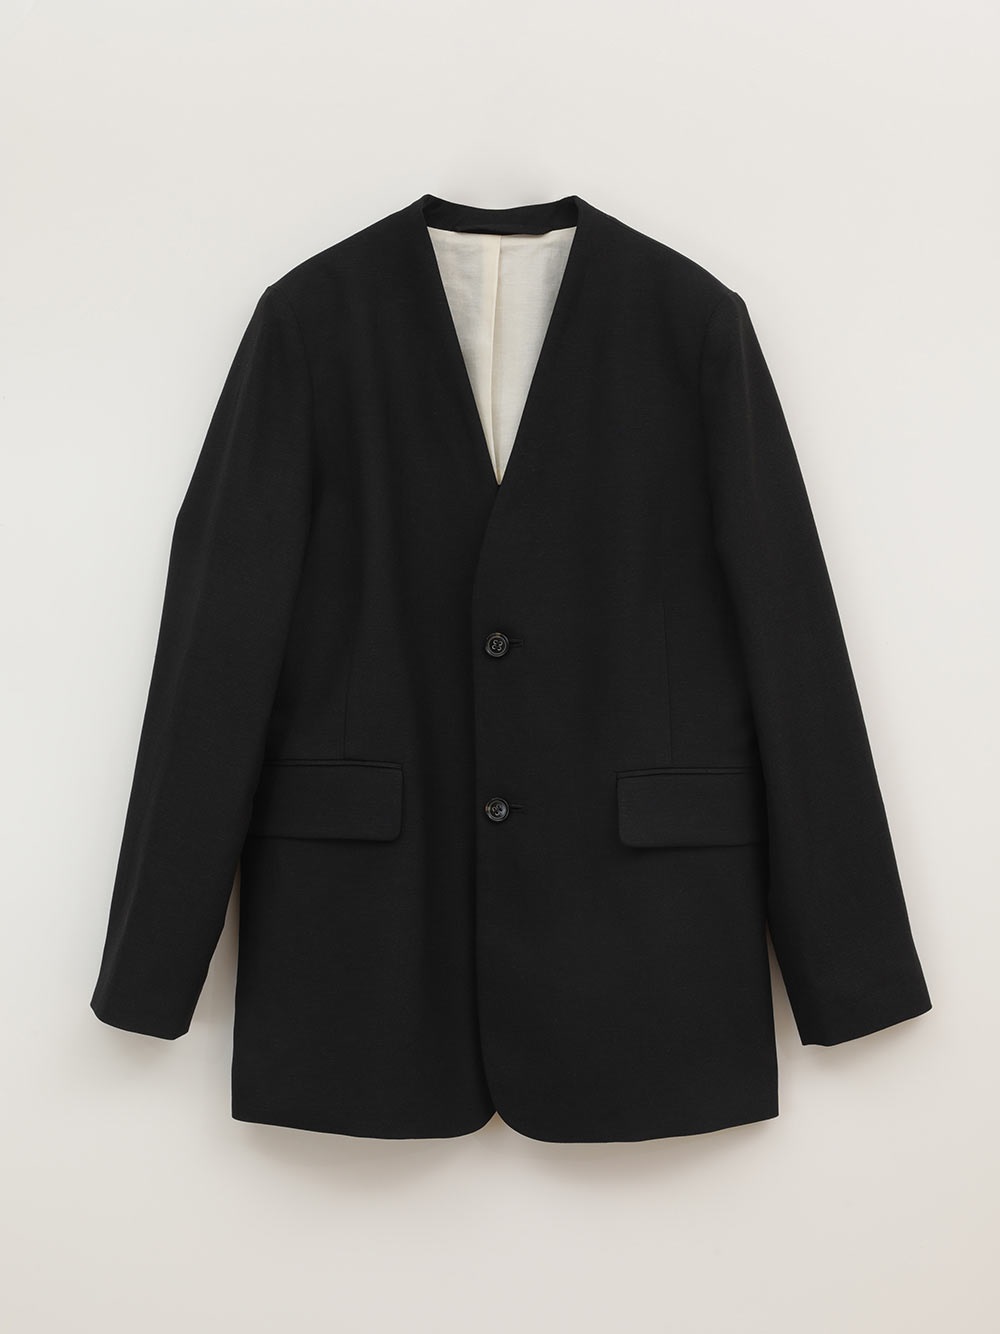 Pe/Li No Collar Jacket [Preorder](70ネイビー-フリー)